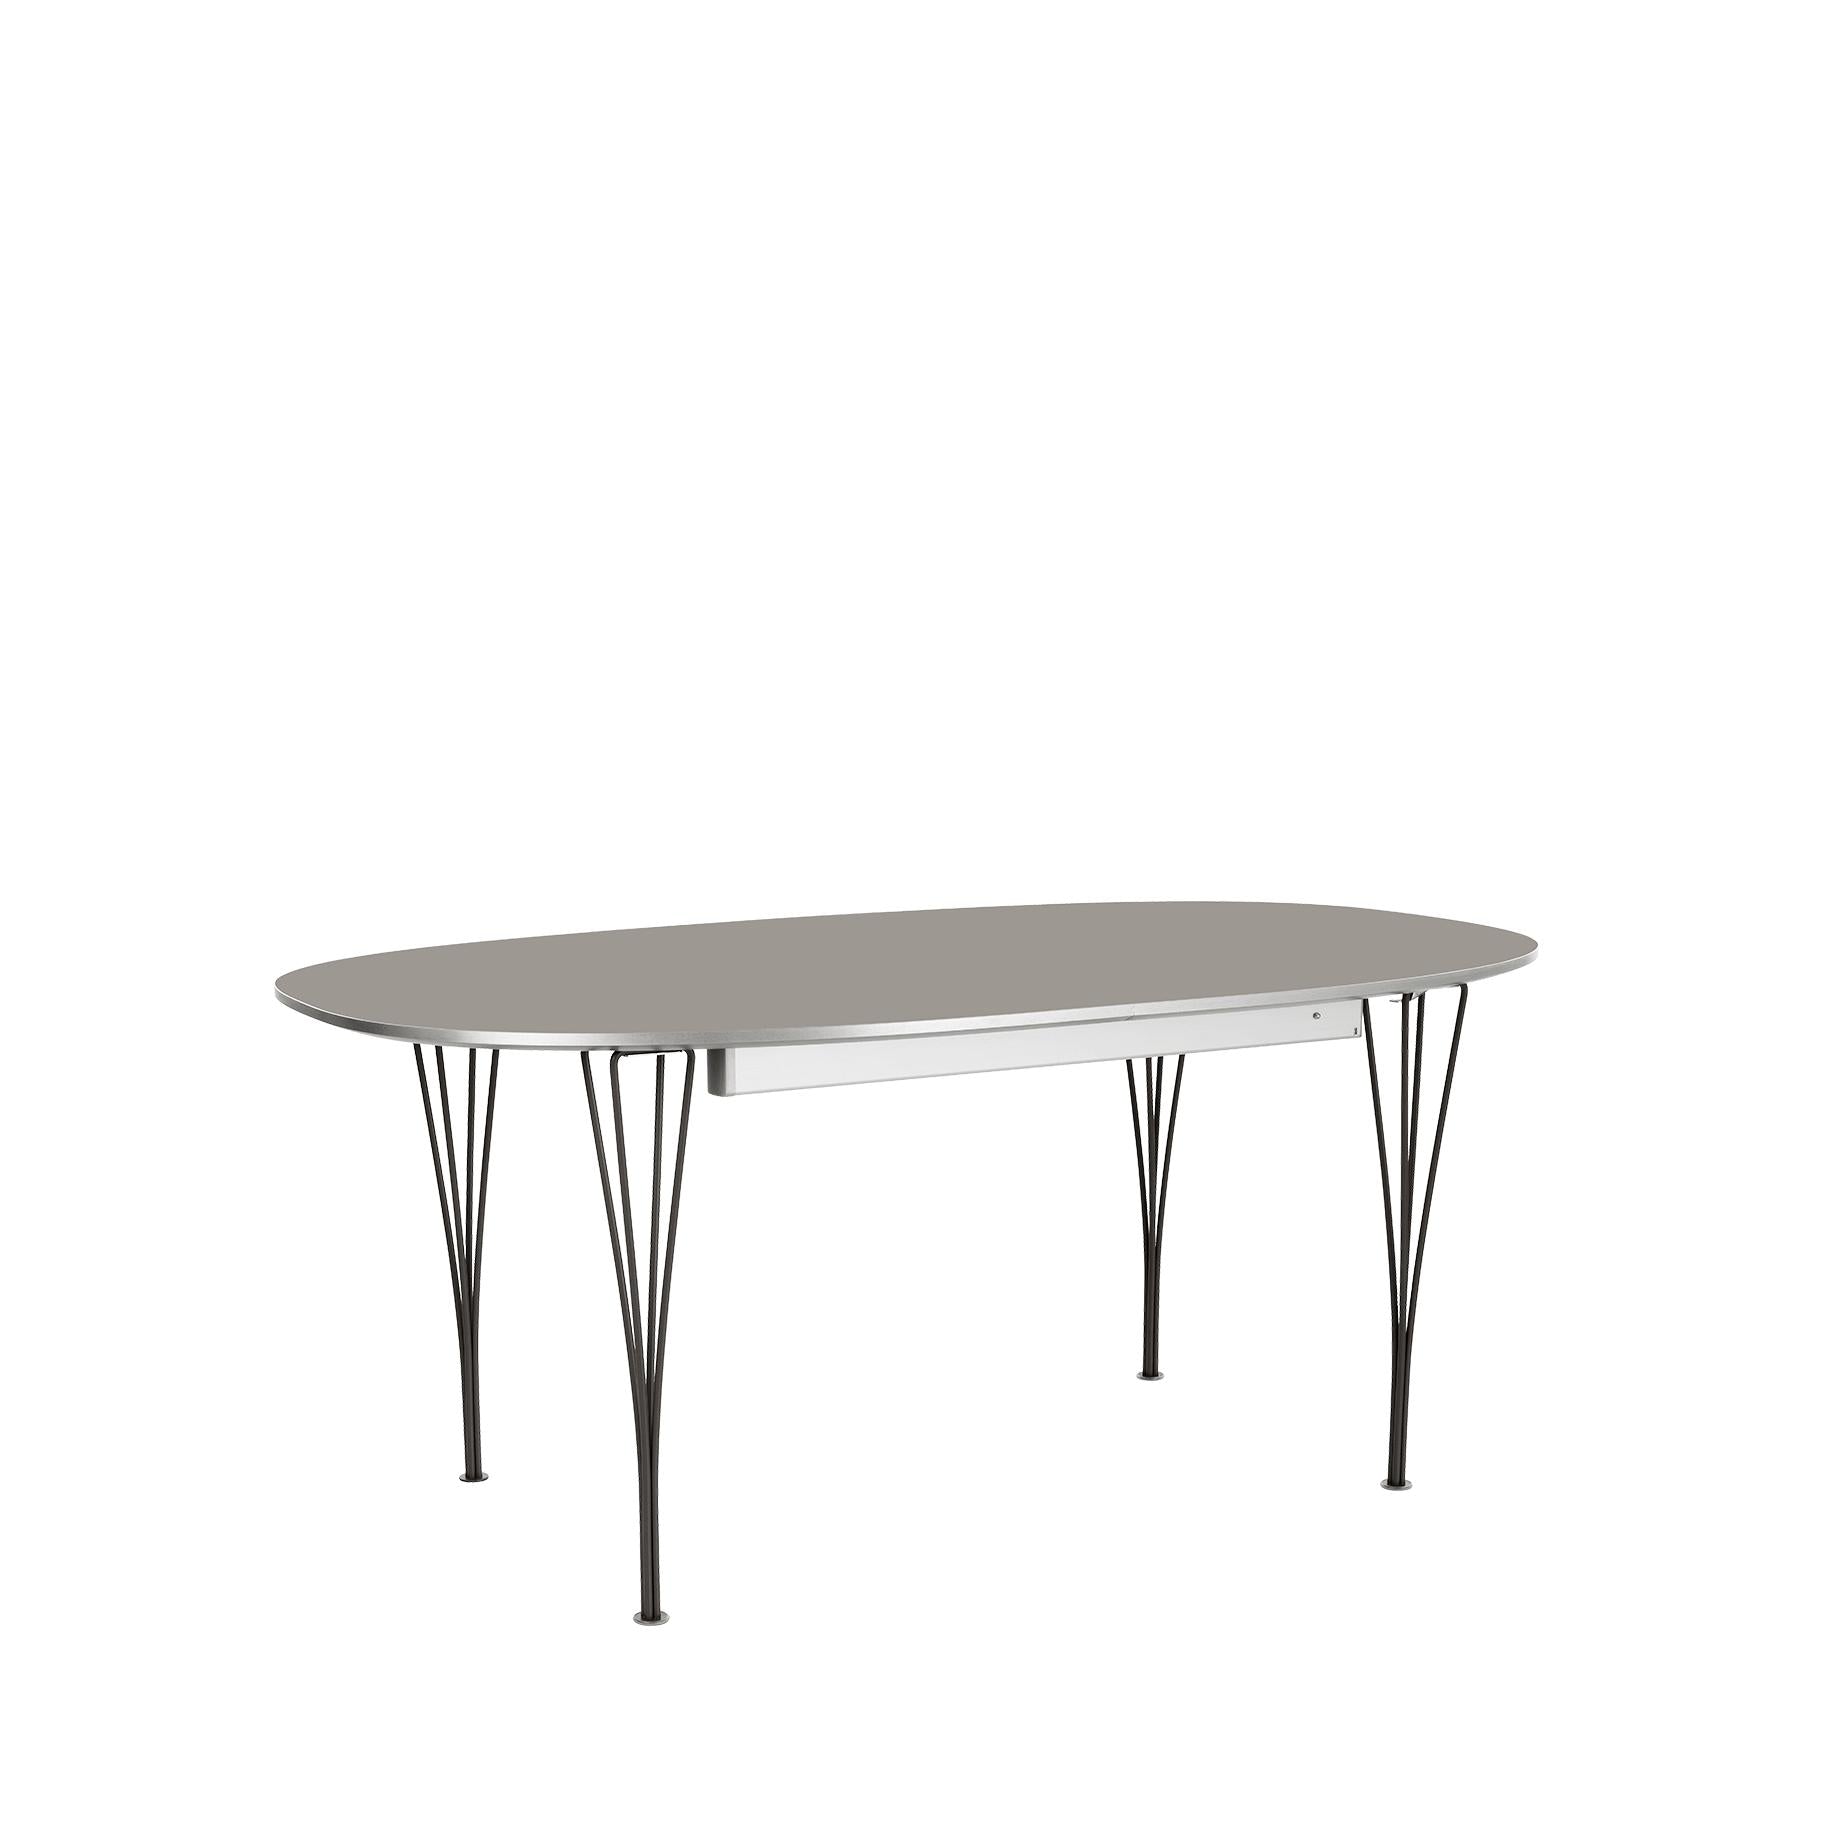 Fritz Hansen Super ellipse utdragbart bord lackat 100 x170/270 cm, grå laminat